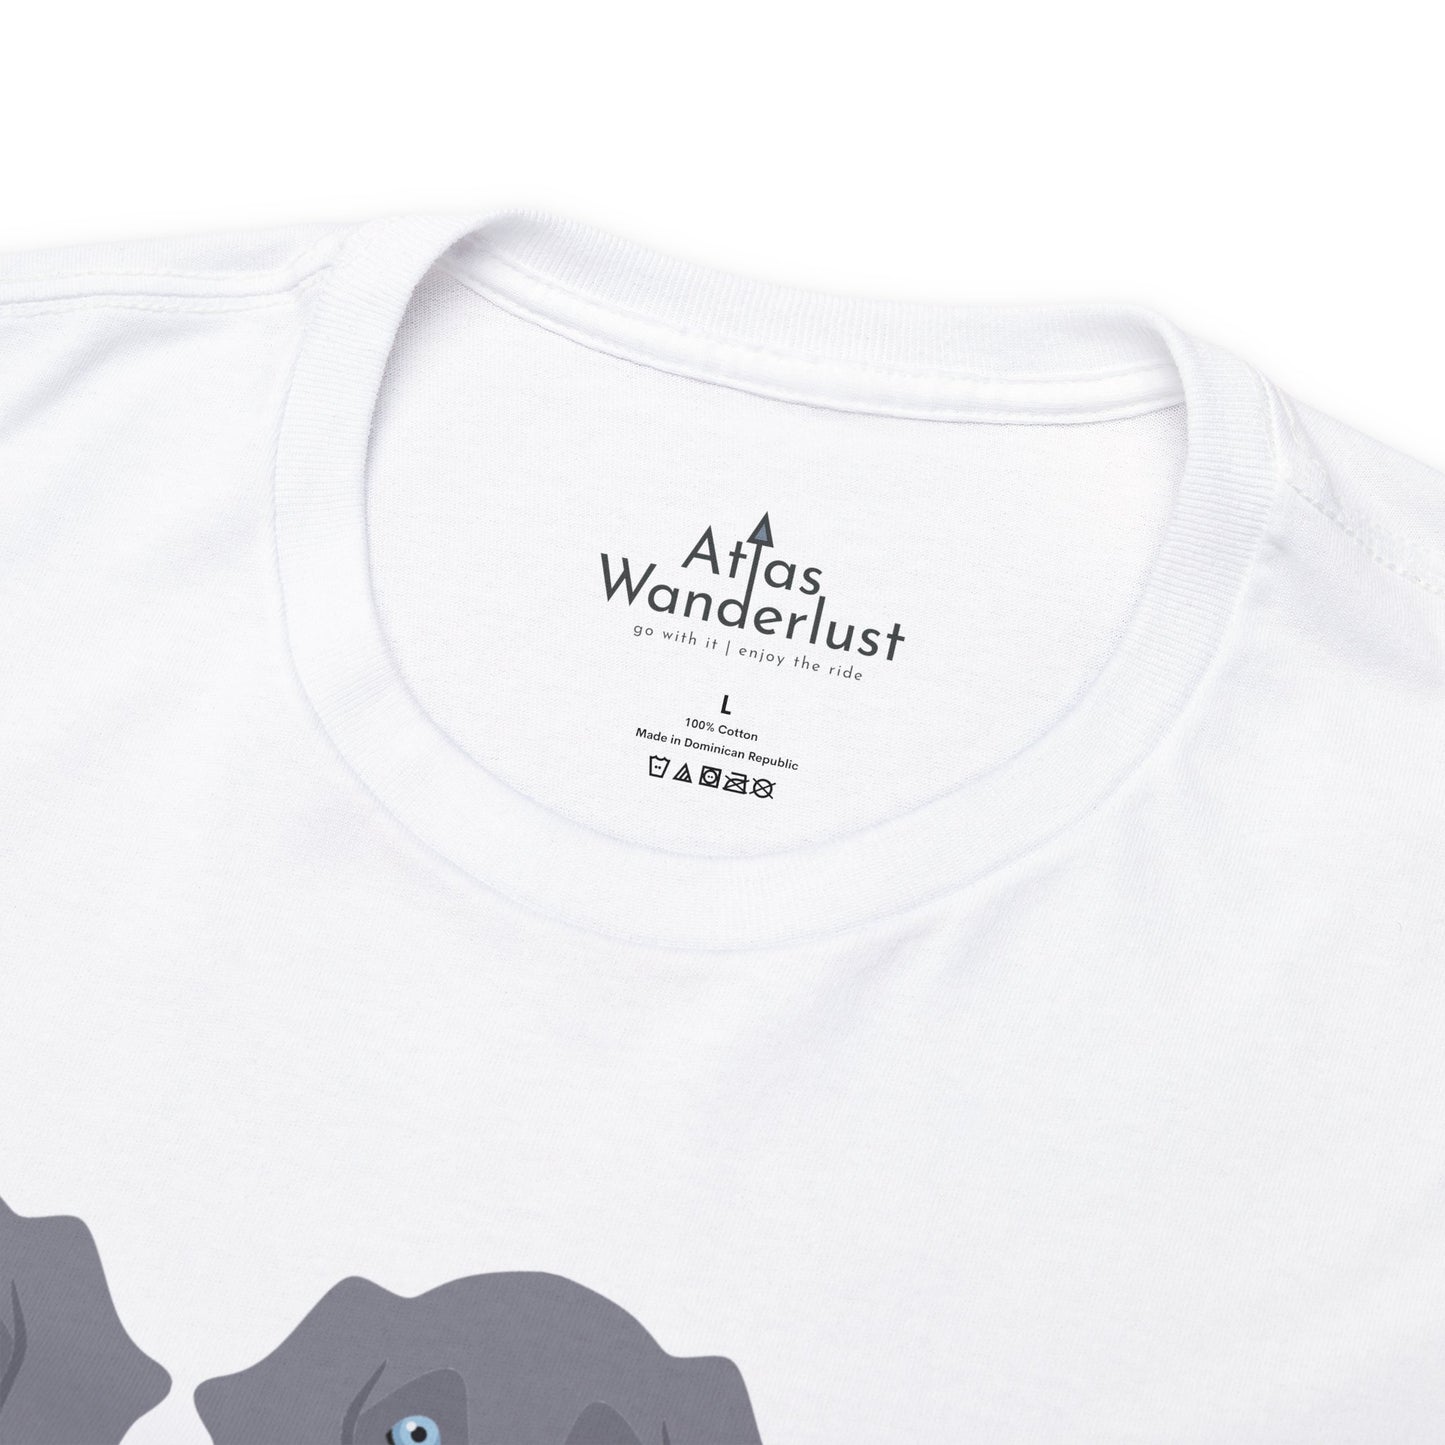 Weimaraner T-Shirt, Well-Suited Weim Tee